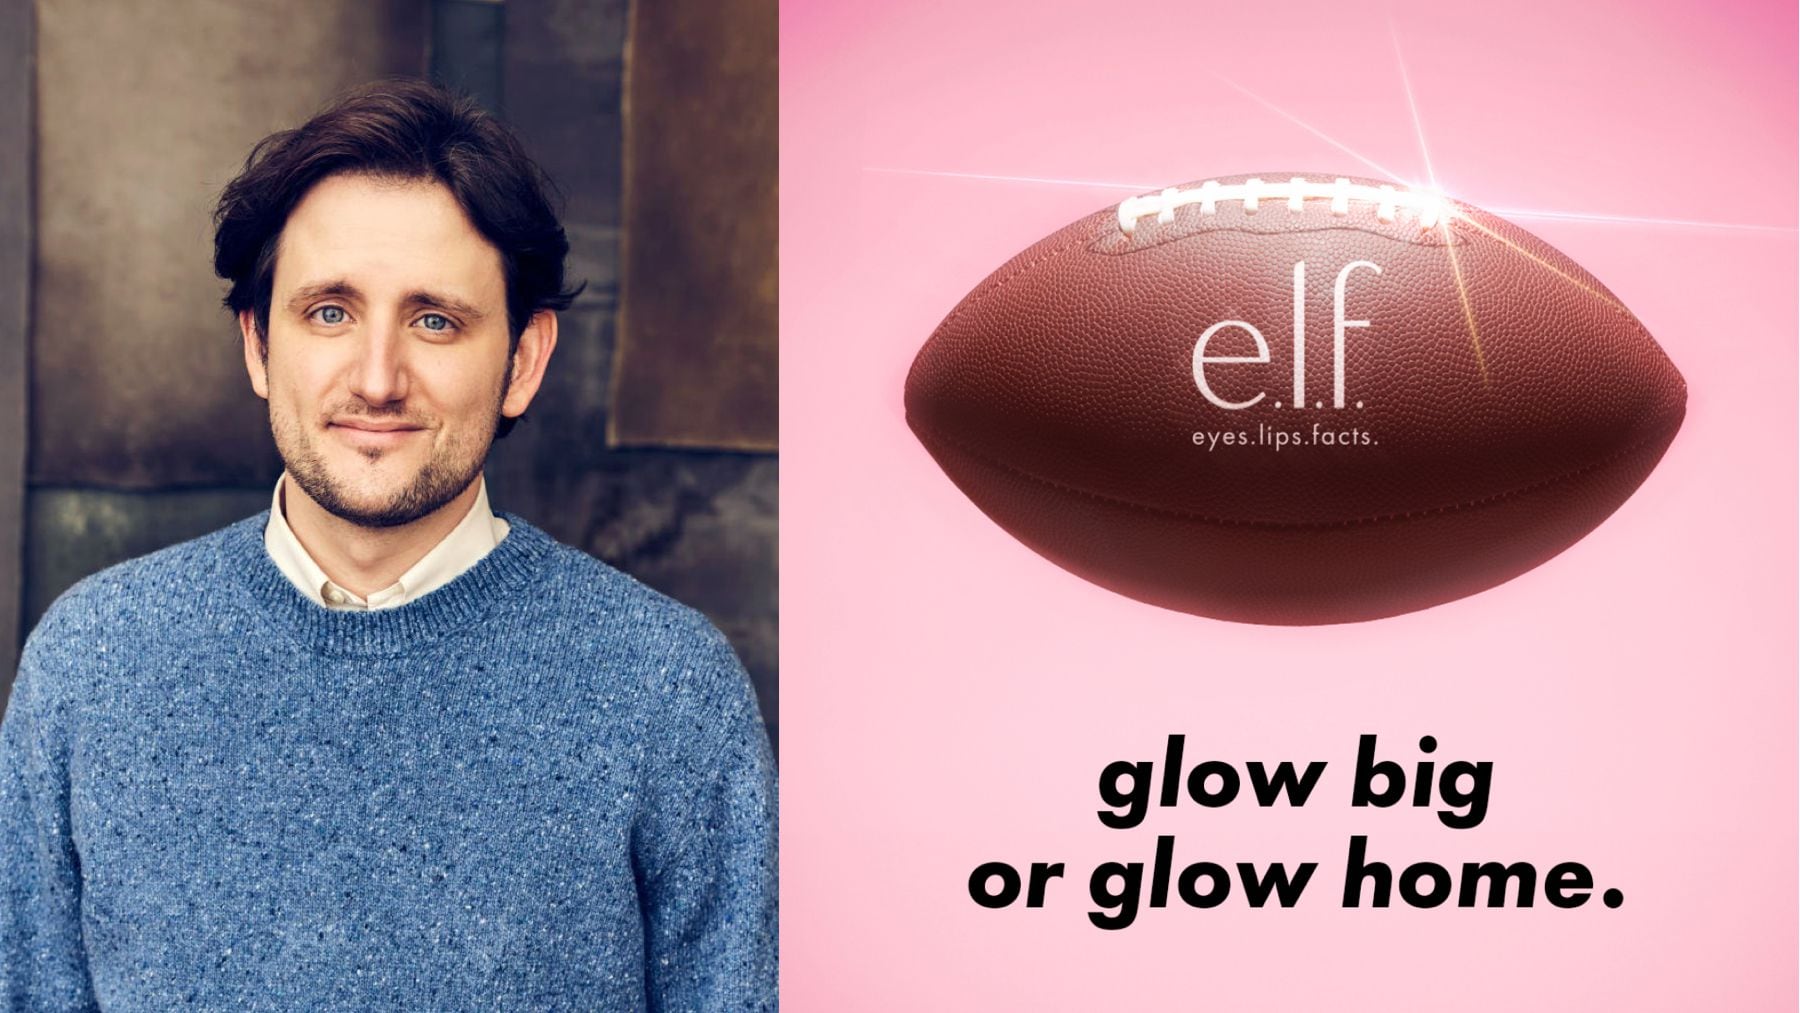 E.l.f. Cosmetics Returns to Super Bowl